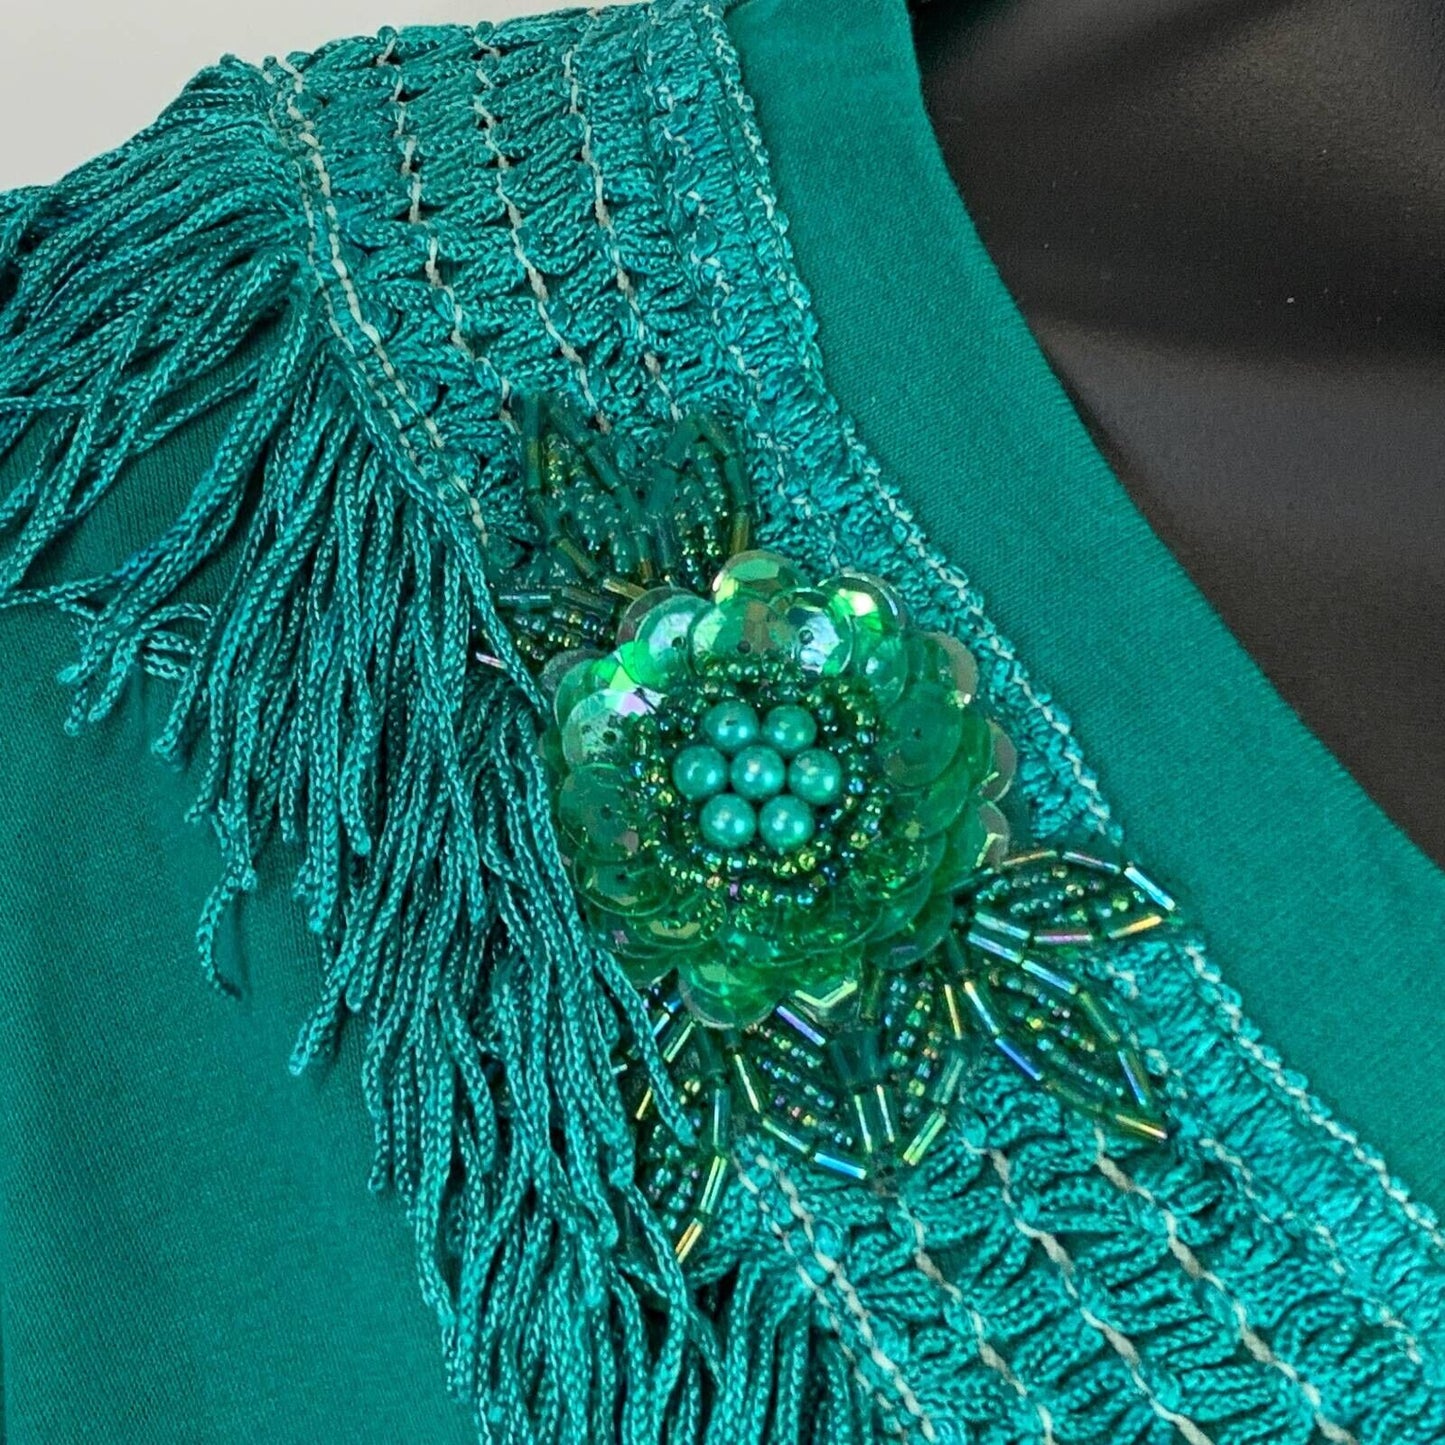 Cesucci 复古 90 年代衬衫绿色长袖 V 领装饰珠子美国 2X 全新